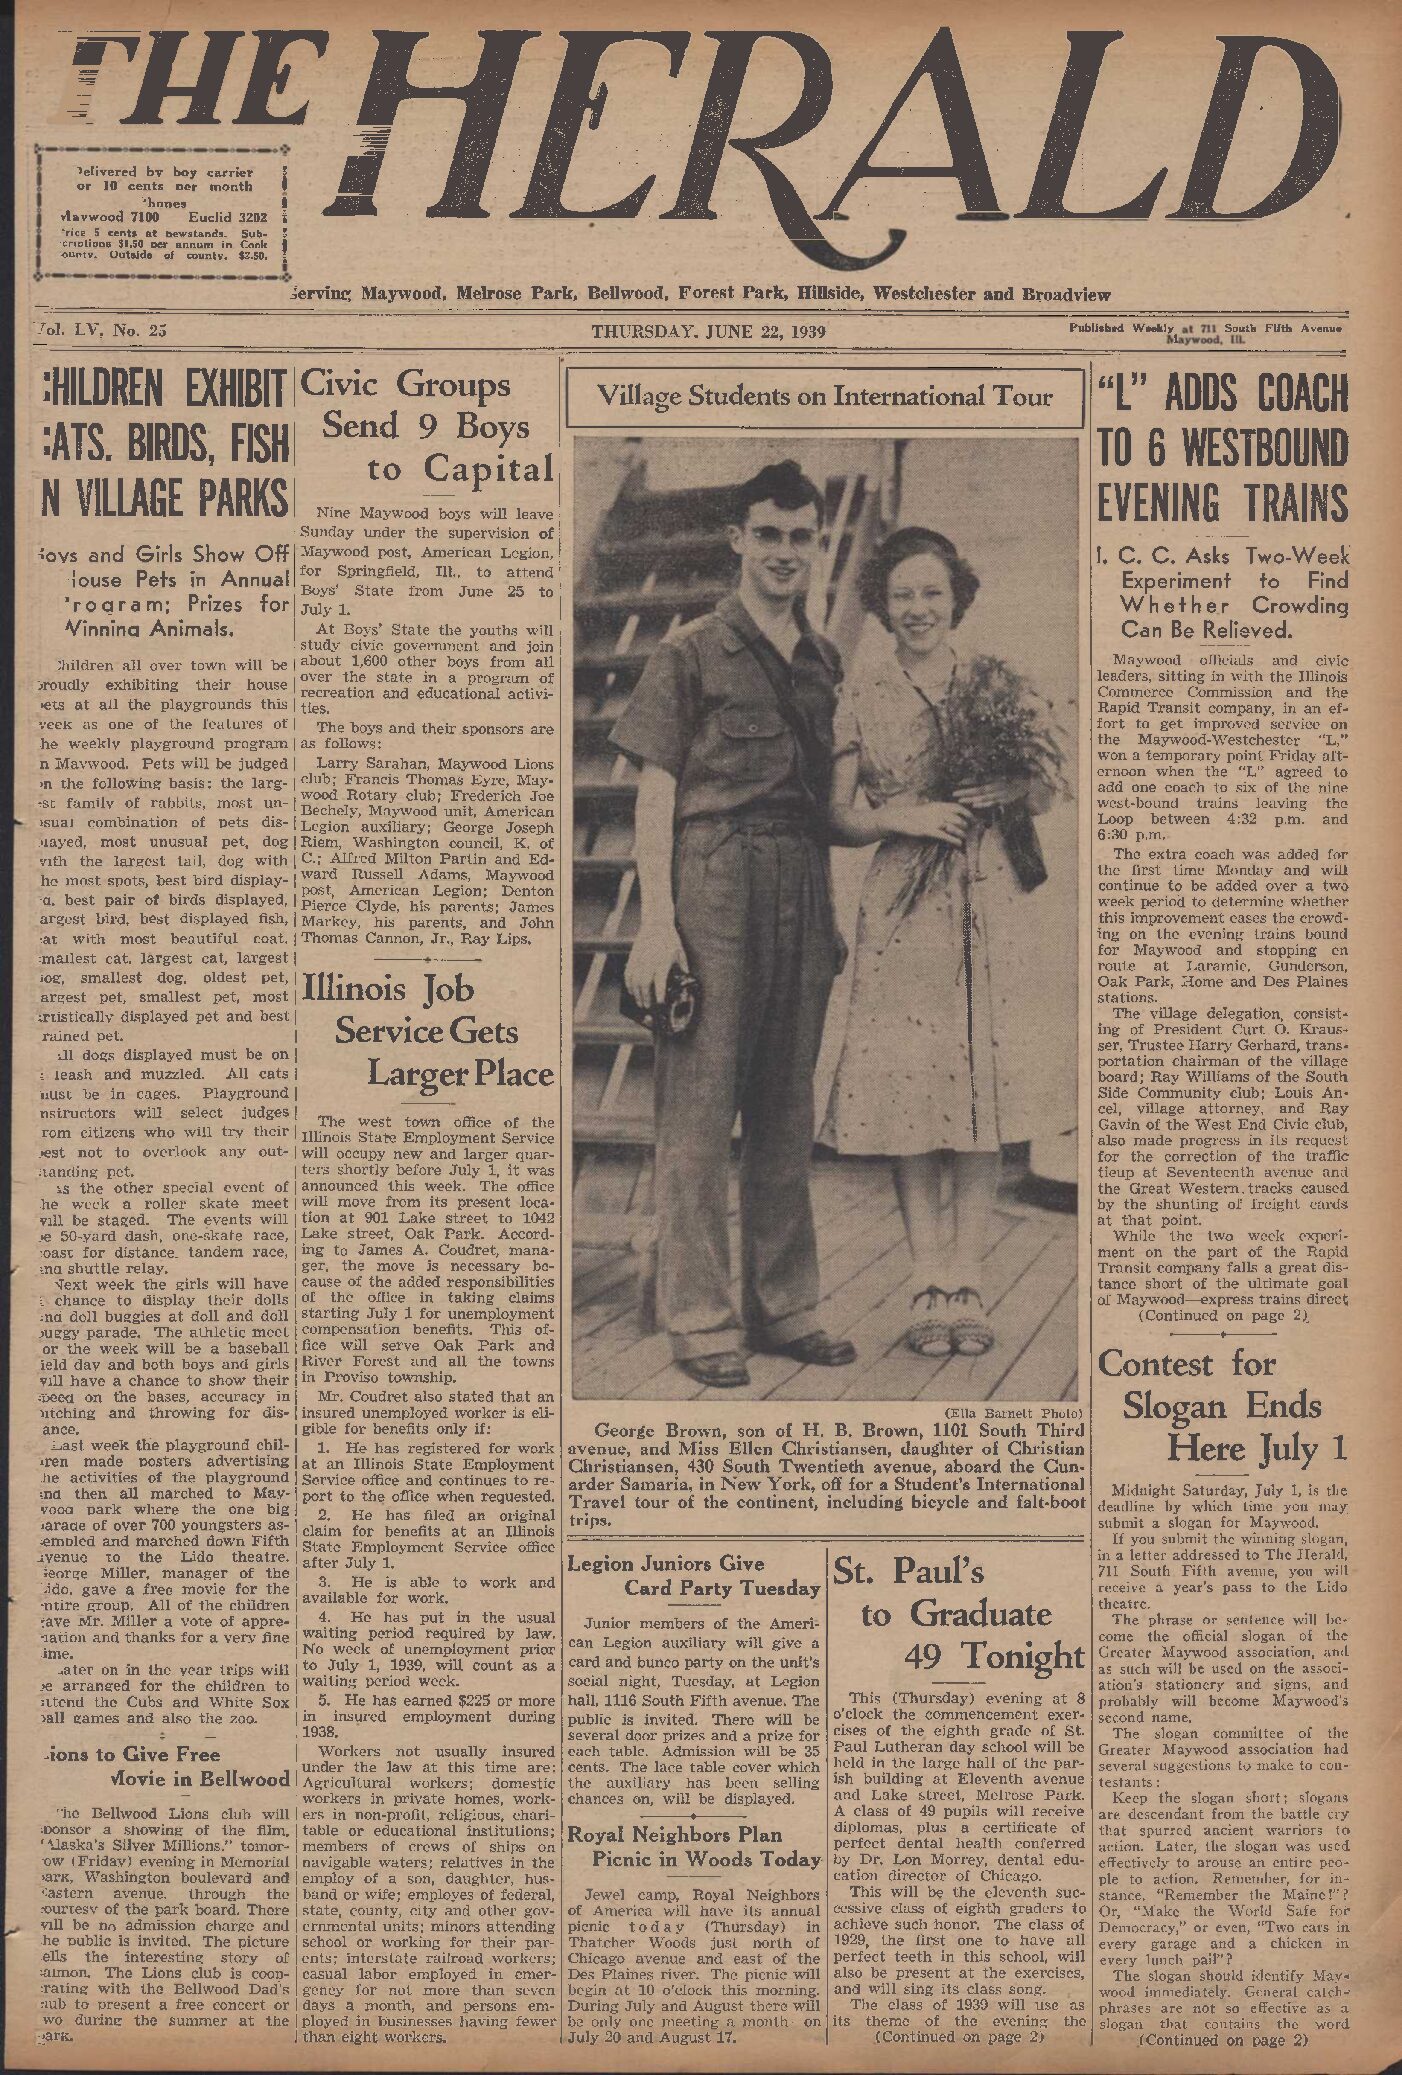 The Herald – 19390622